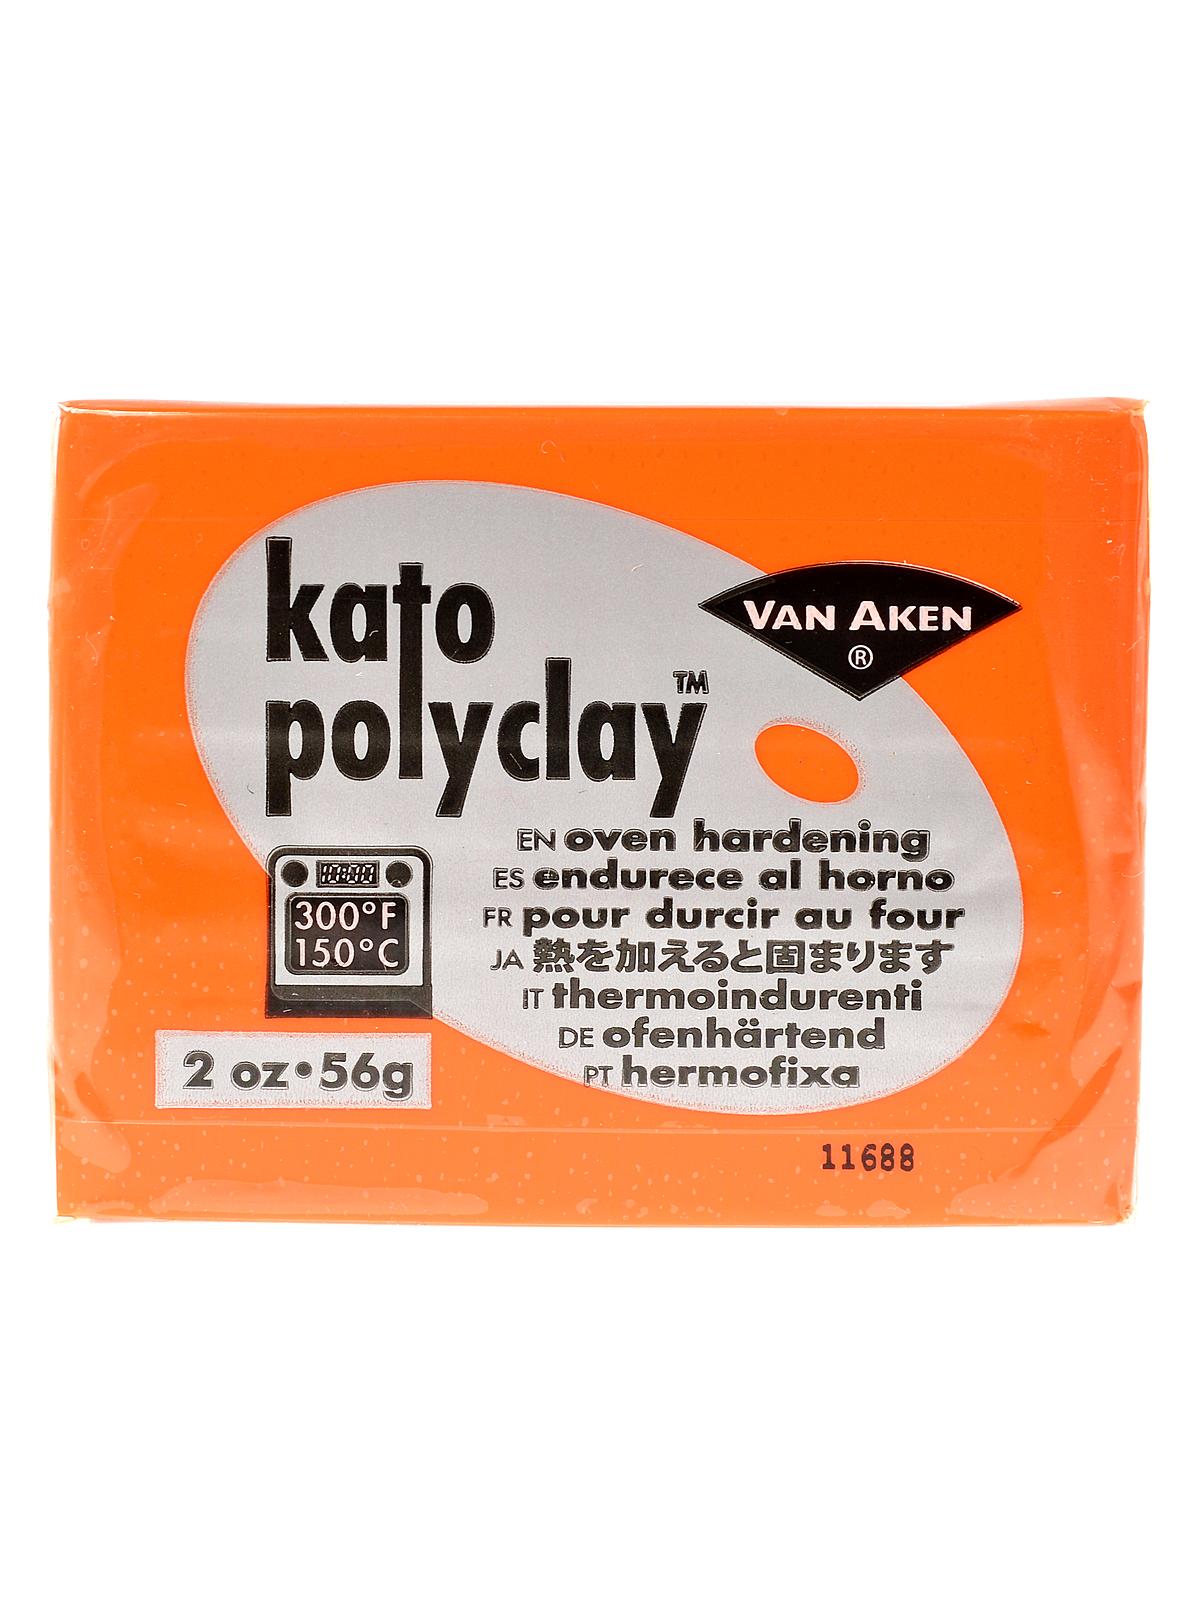 Kato Polyclay Orange 2 Oz.